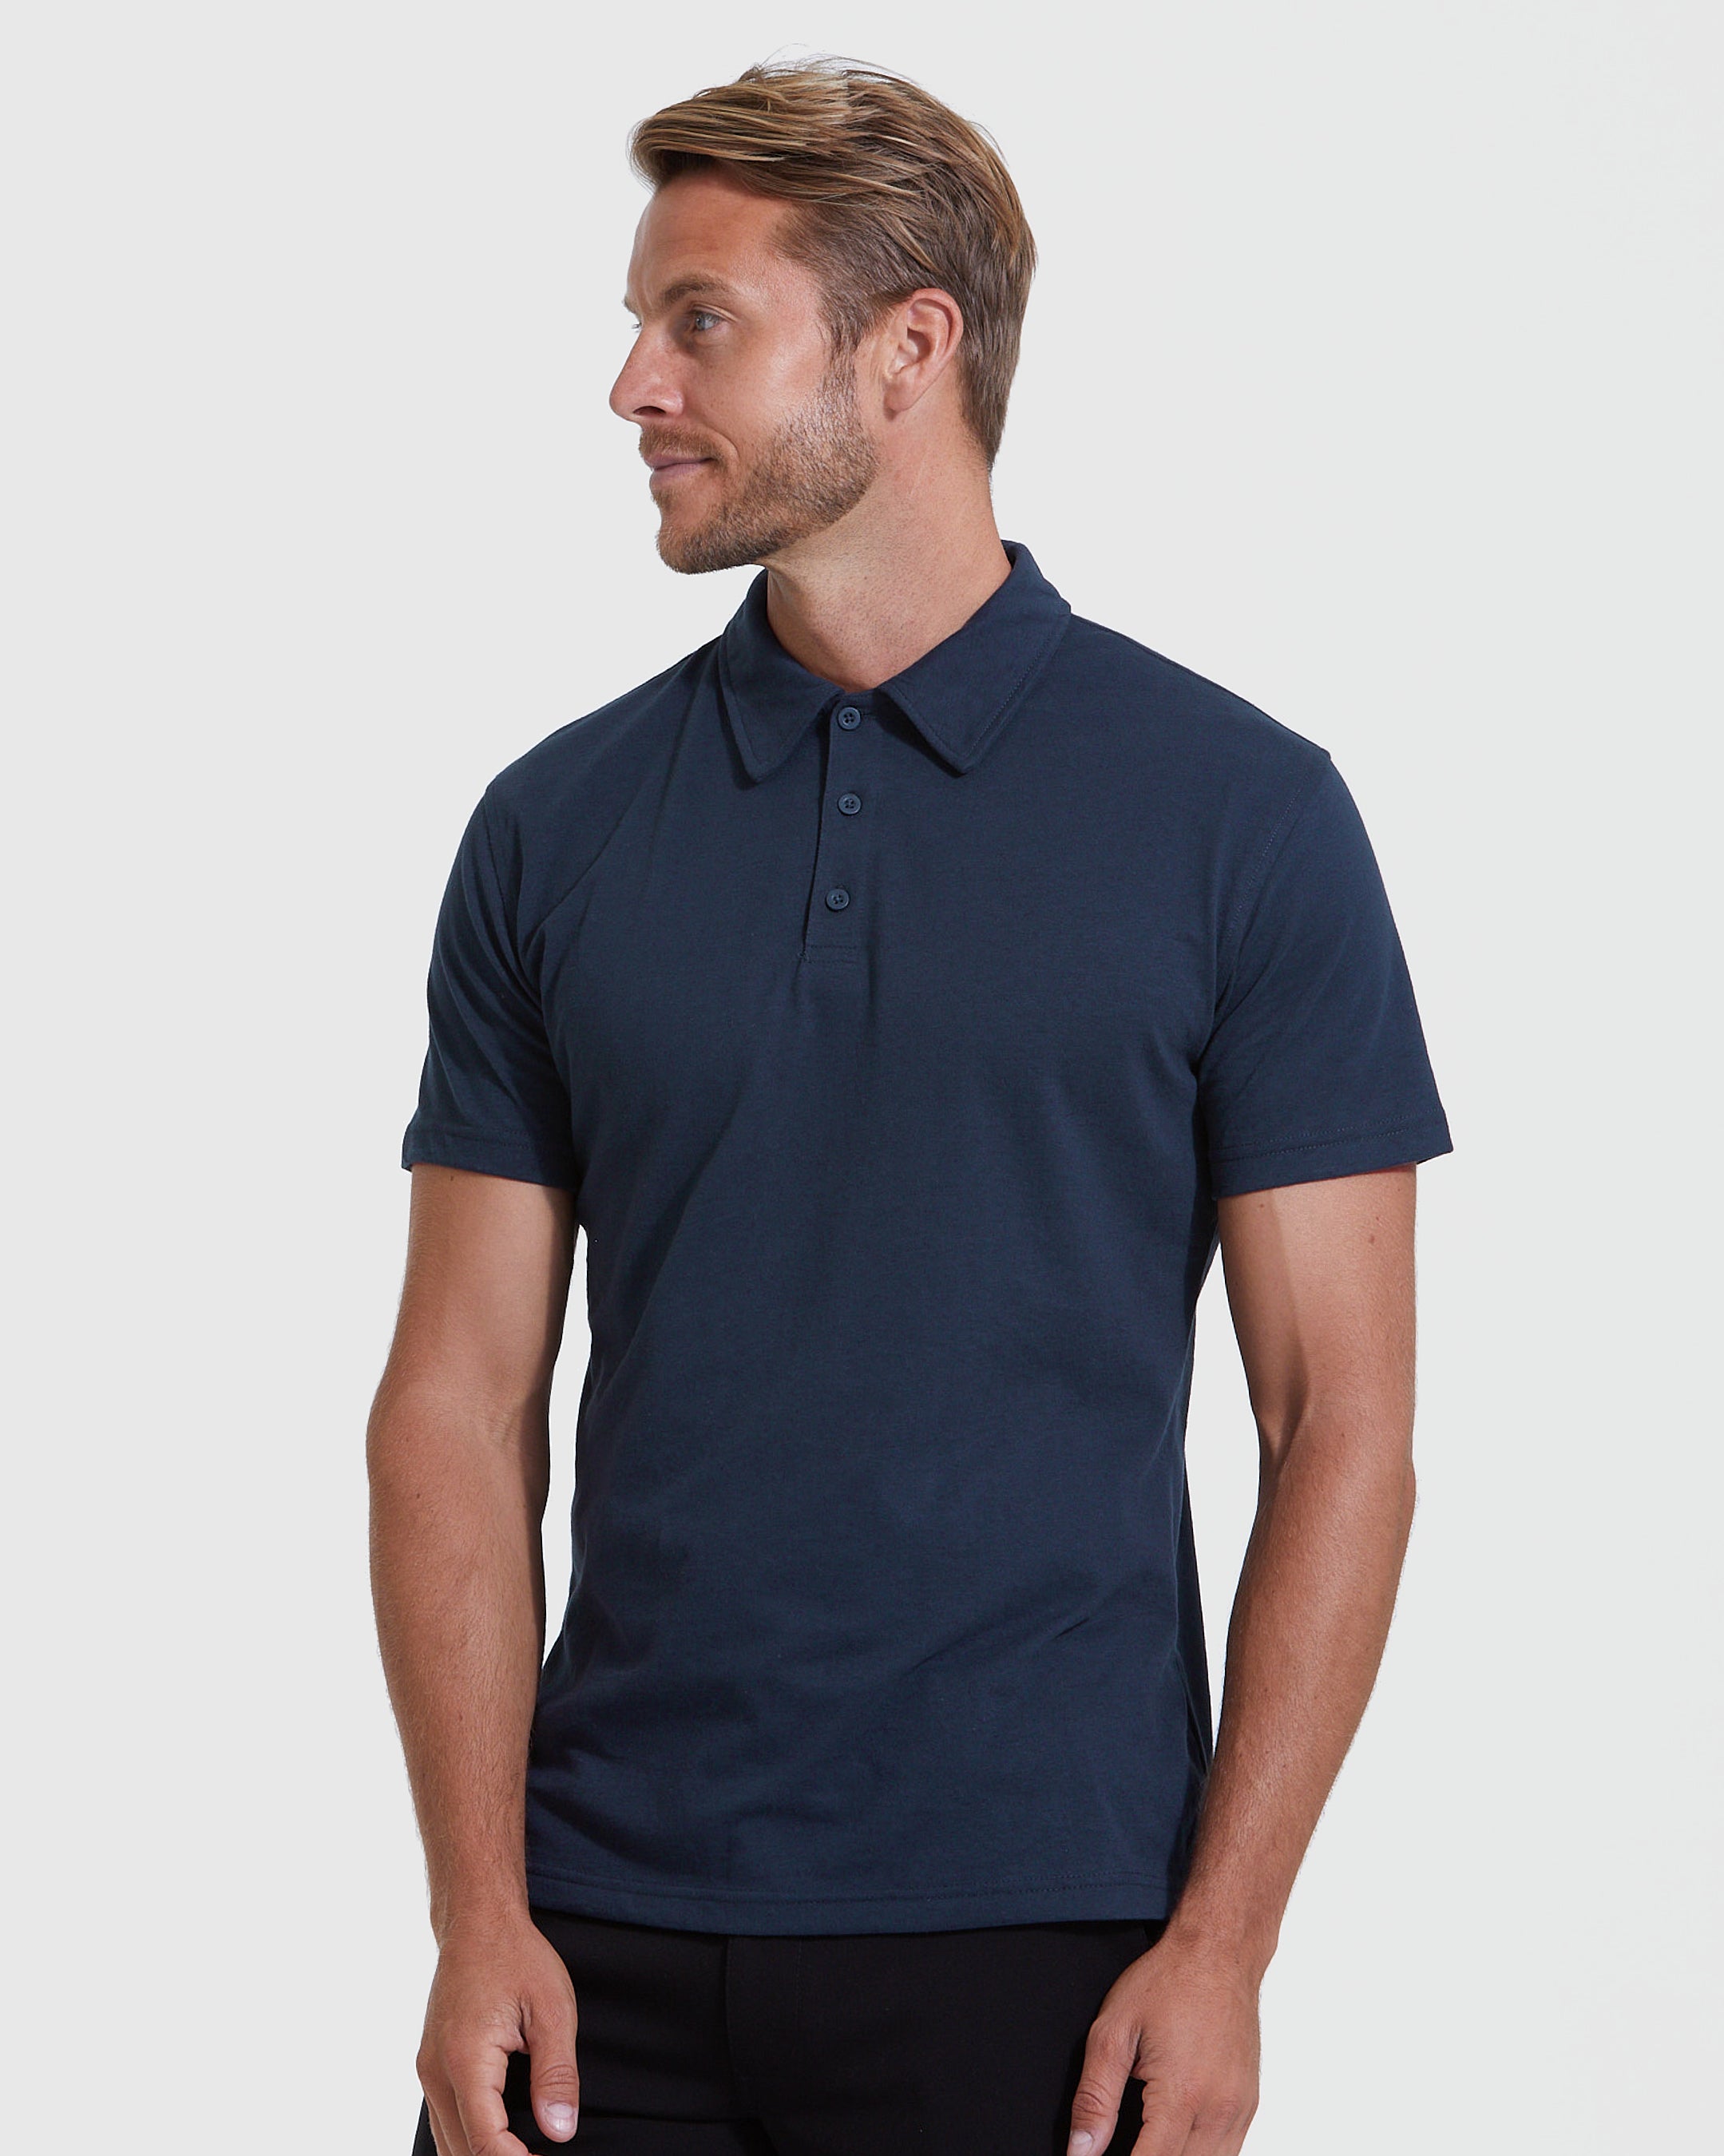 Navy Blue Polo | Men's Navy Blue Polo Shirts | True Classic